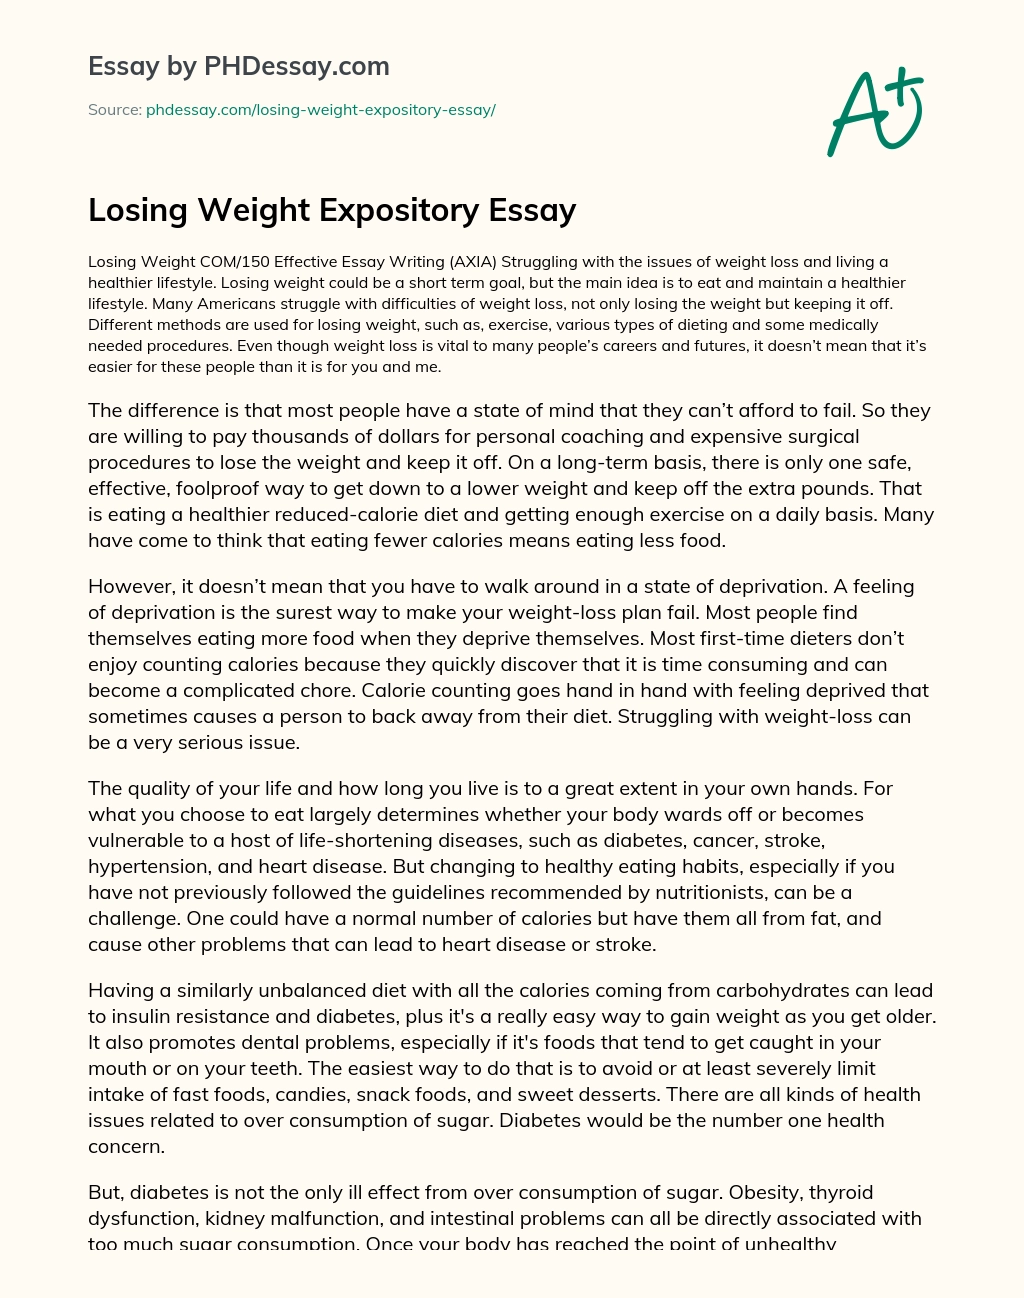 Losing Weight Expository Essay essay